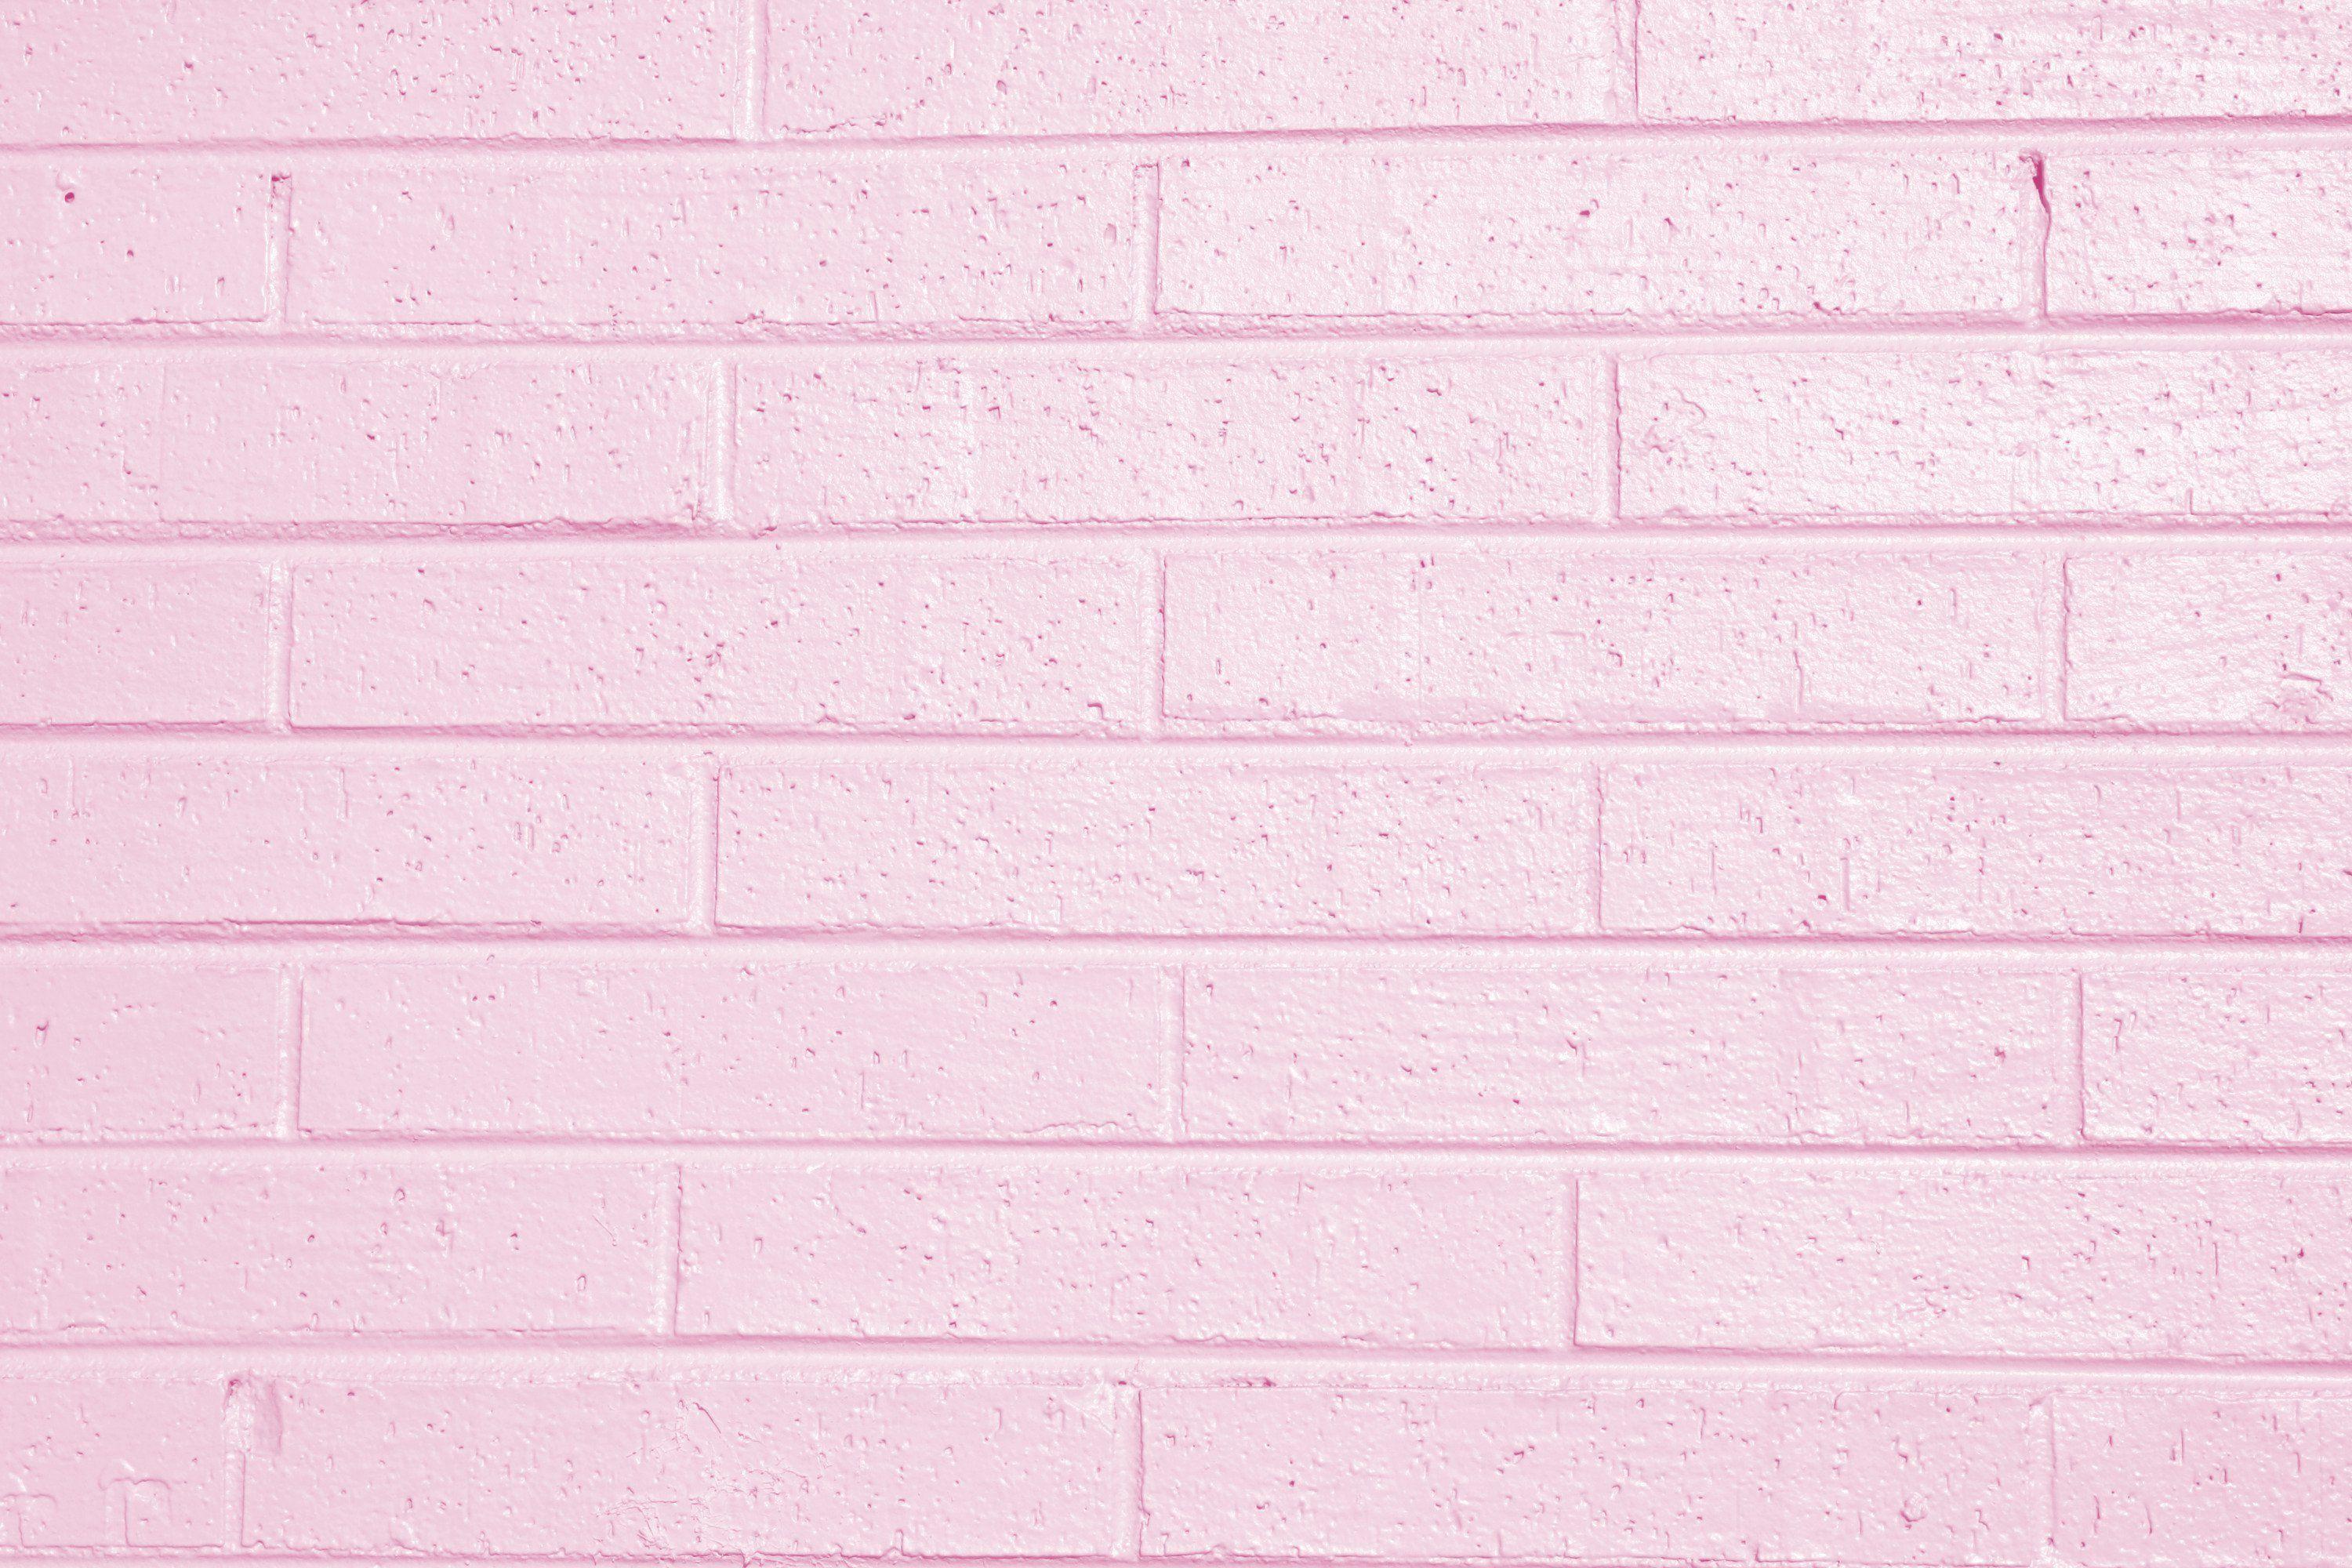 Light Pink Polka Dot Background Tumblr. Beautiful Anchor Pattern